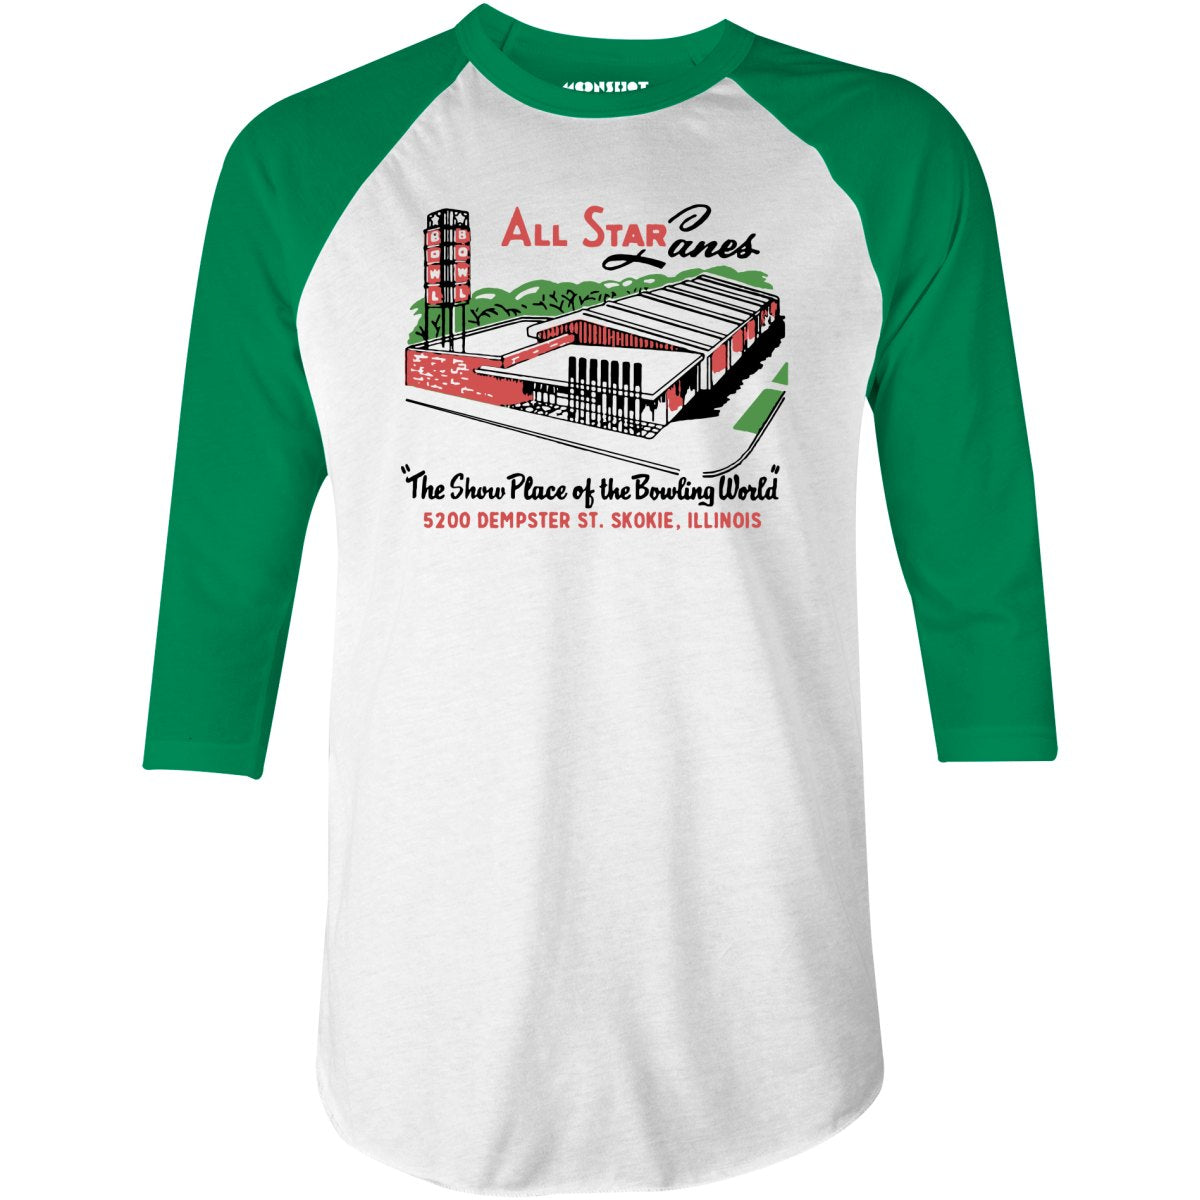 All Star Lanes - St. Skokie, IL - Vintage Bowling Alley - 3/4 Sleeve Raglan T-Shirt